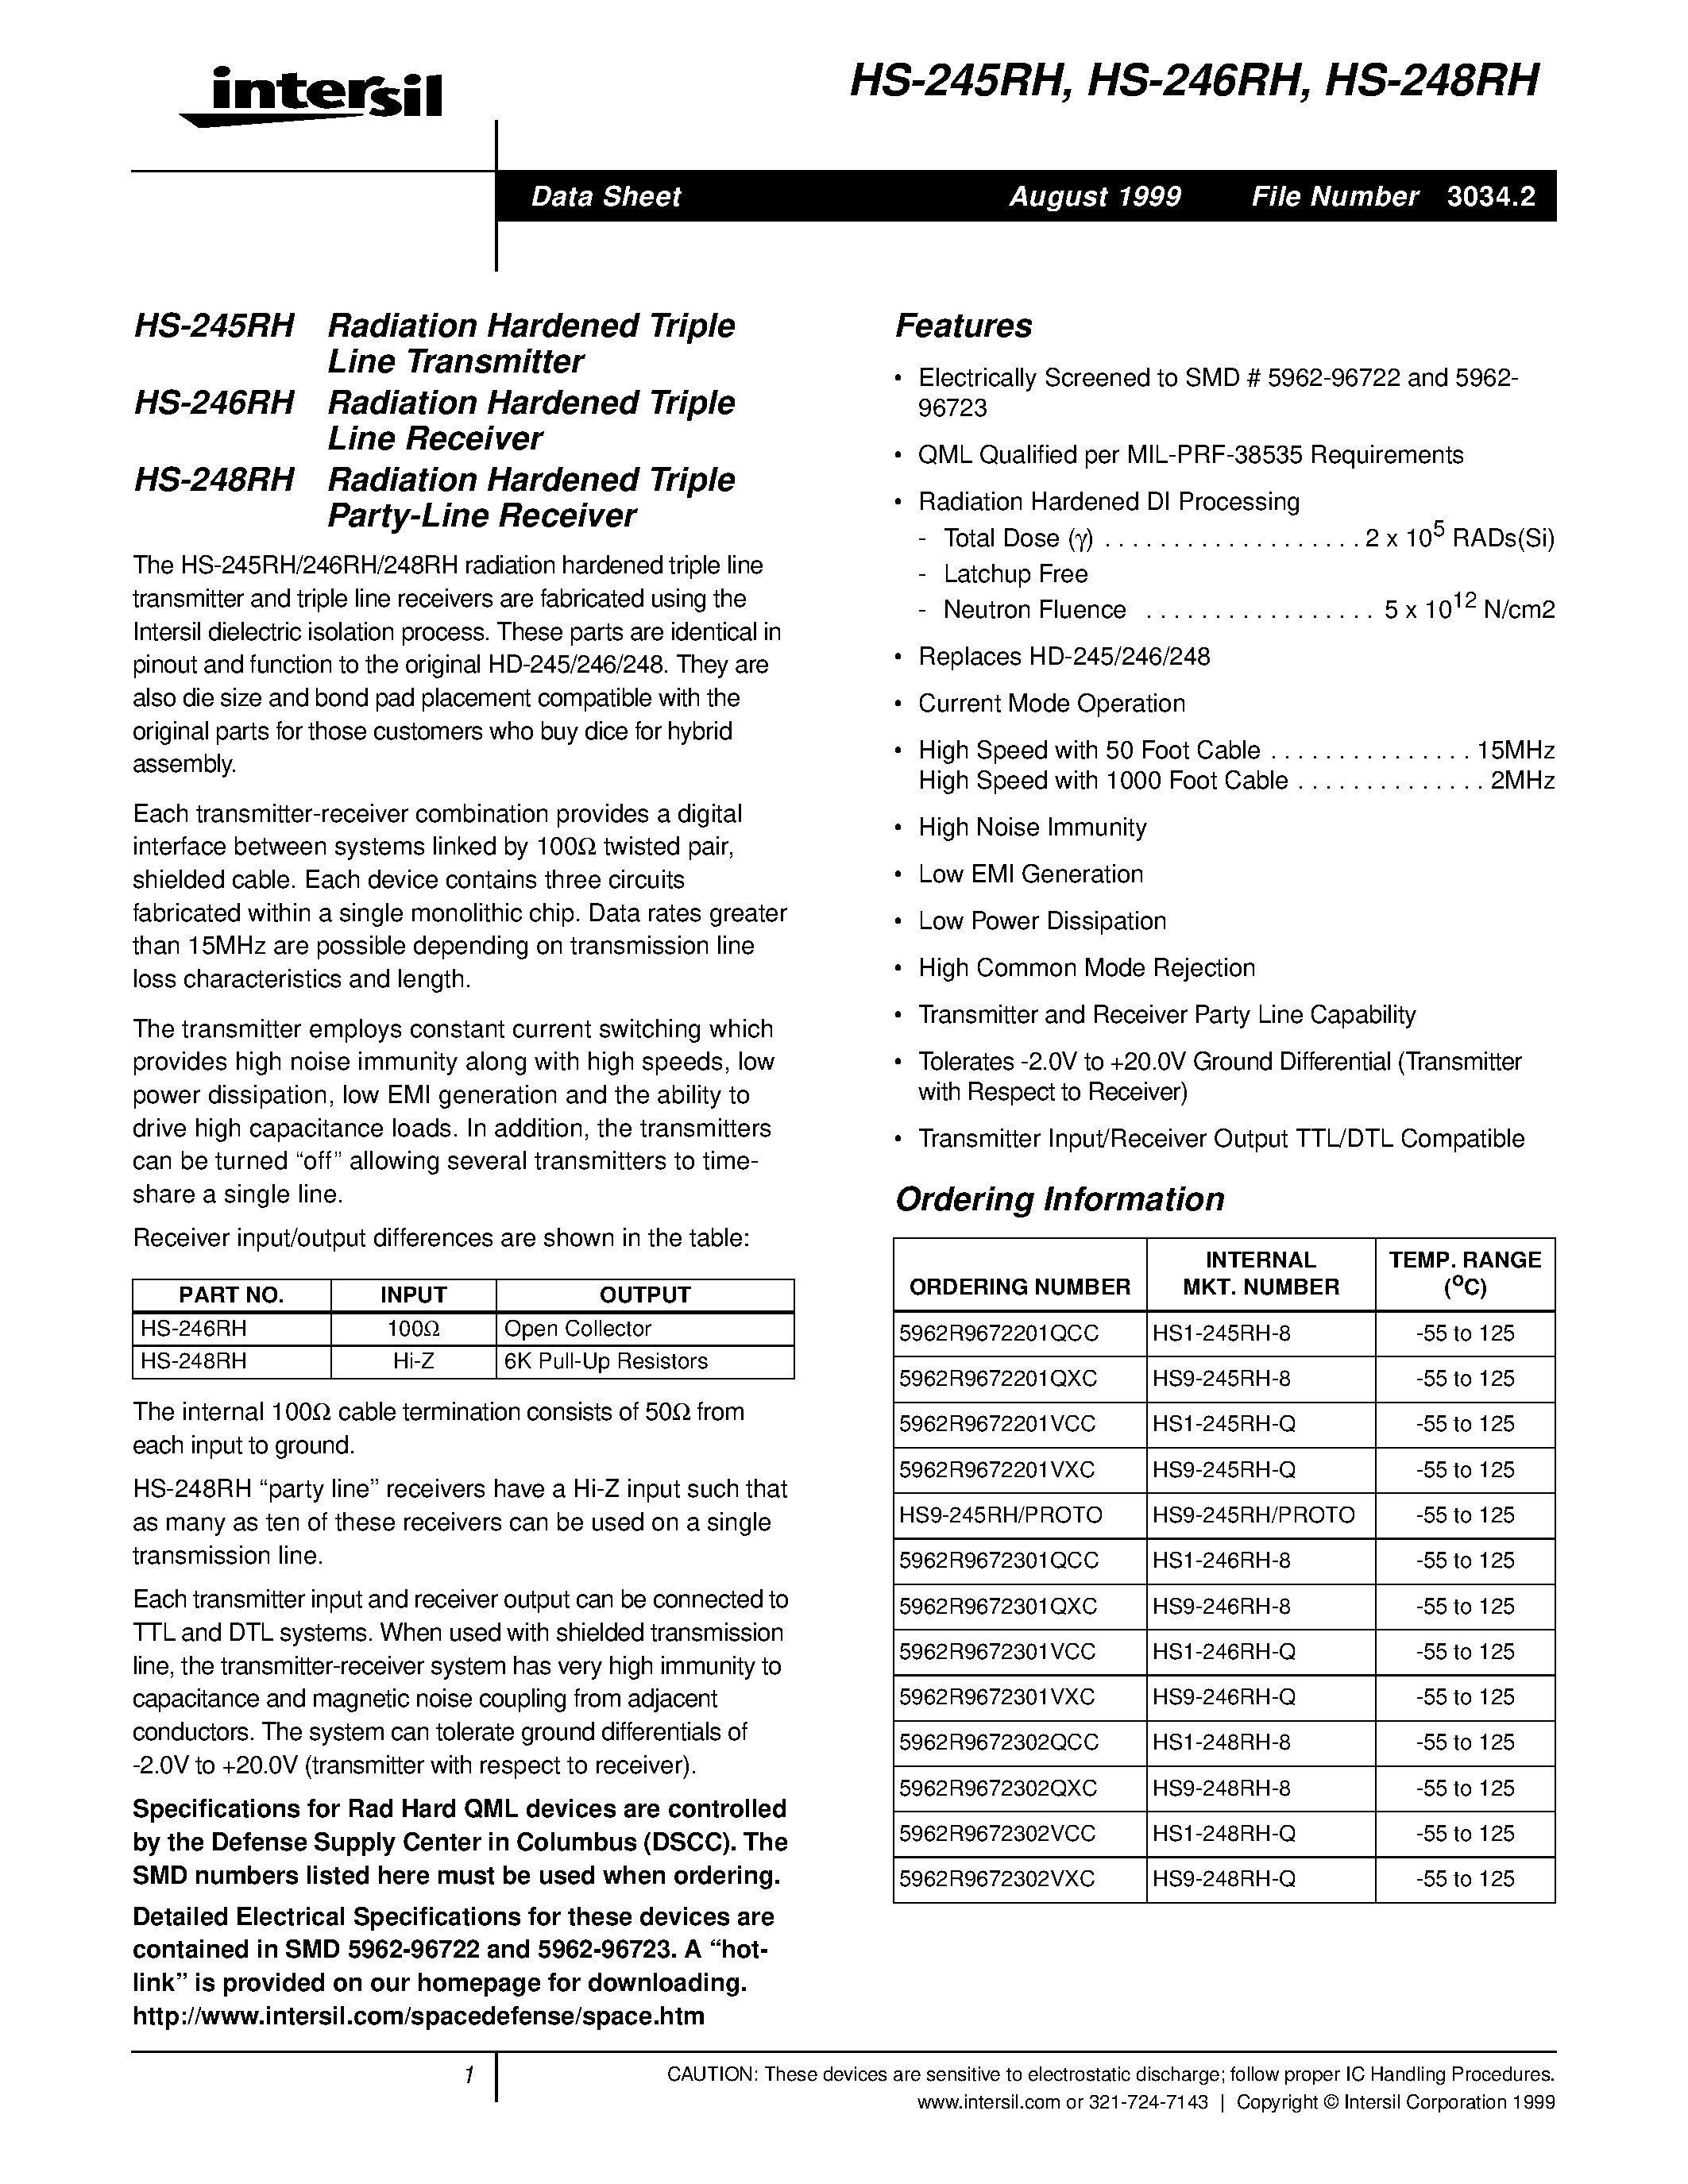 Даташит HS1-246RH-8 - Radiation Hardened Triple Line(party-Line) Transmitter страница 1